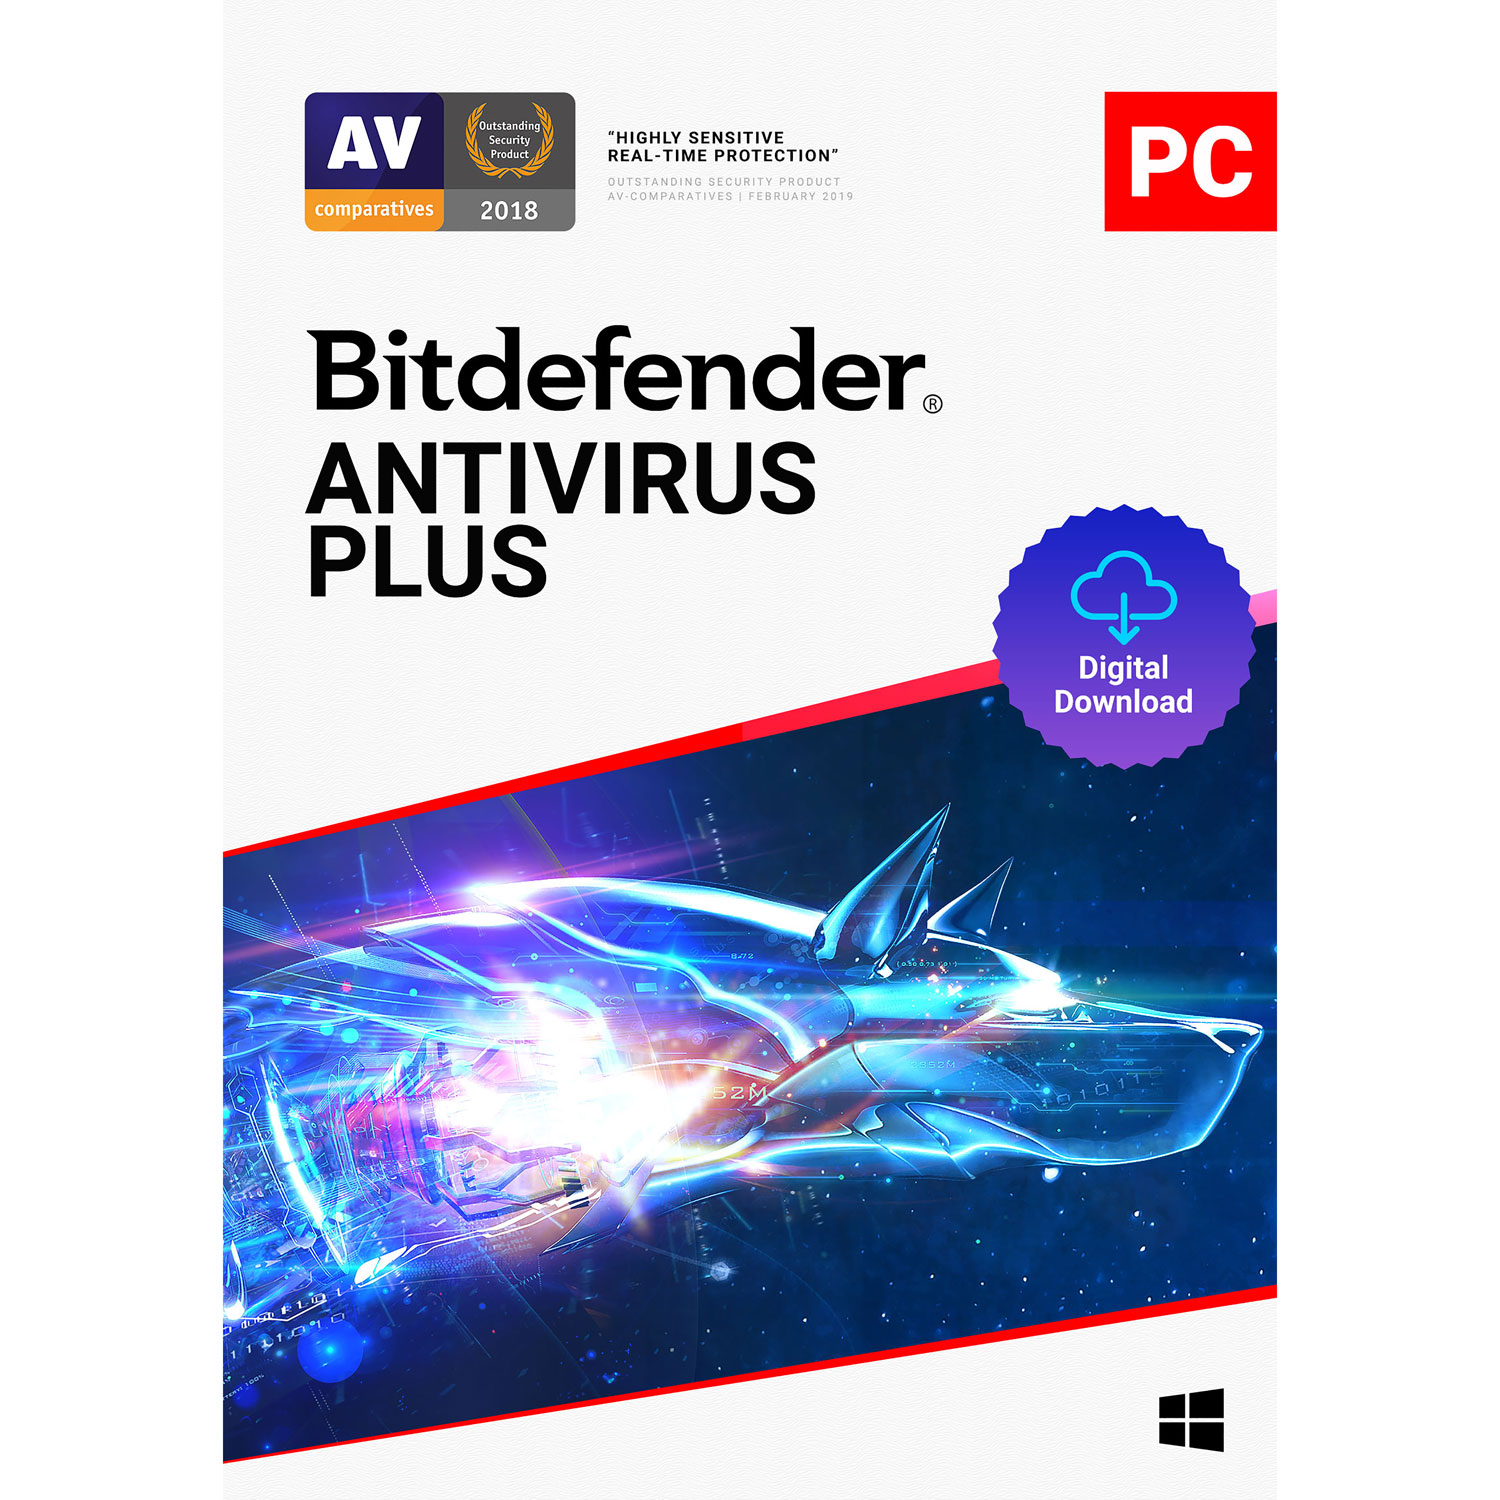 Bitdefender Antivirus Plus Bonus Edition (PC) - 3 User - 2 Yr - Digital Download - Only at Best Buy